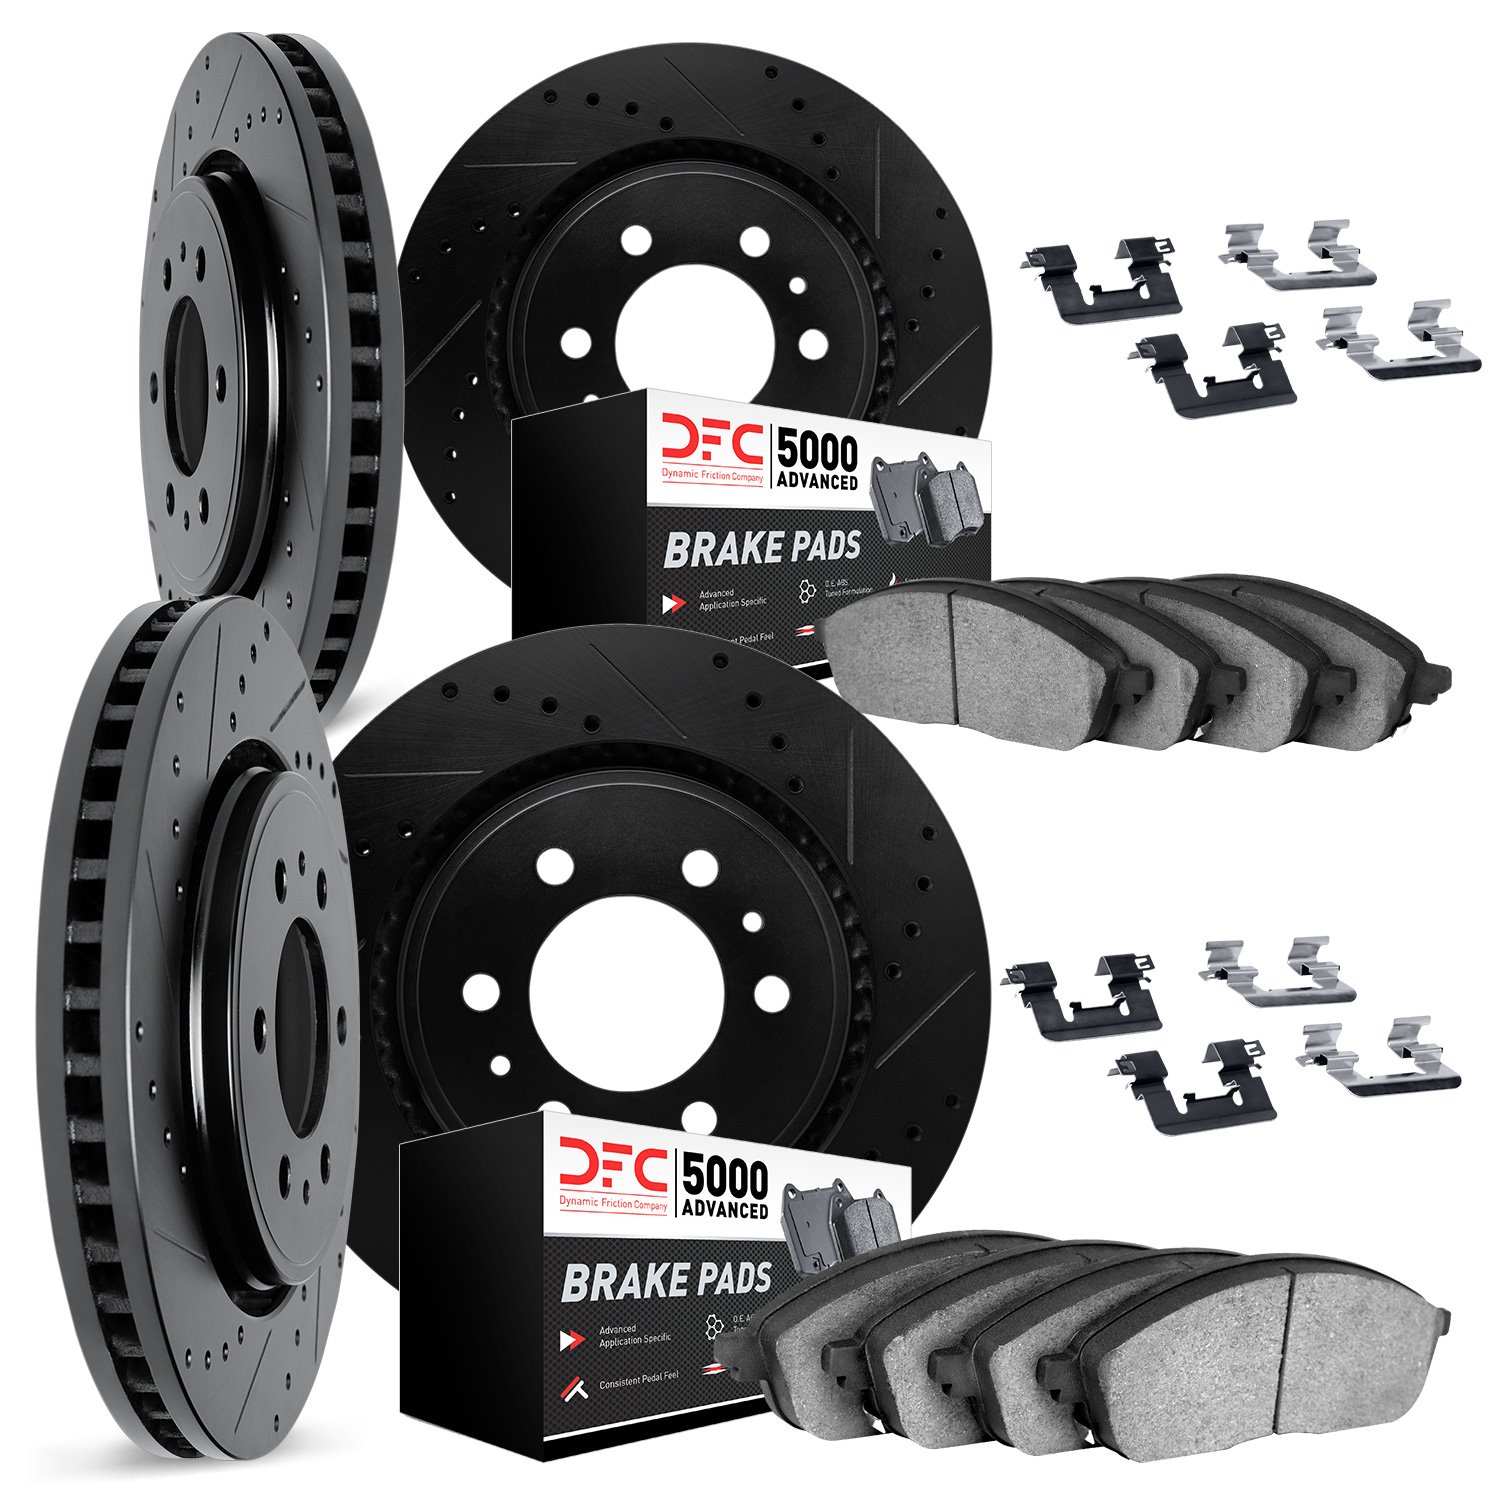 8514-40246 Drilled/Slotted Brake Rotors w/5000 Advanced Brake Pads Kit & Hardware [Black], Fits Select Multiple Makes/Models, Po